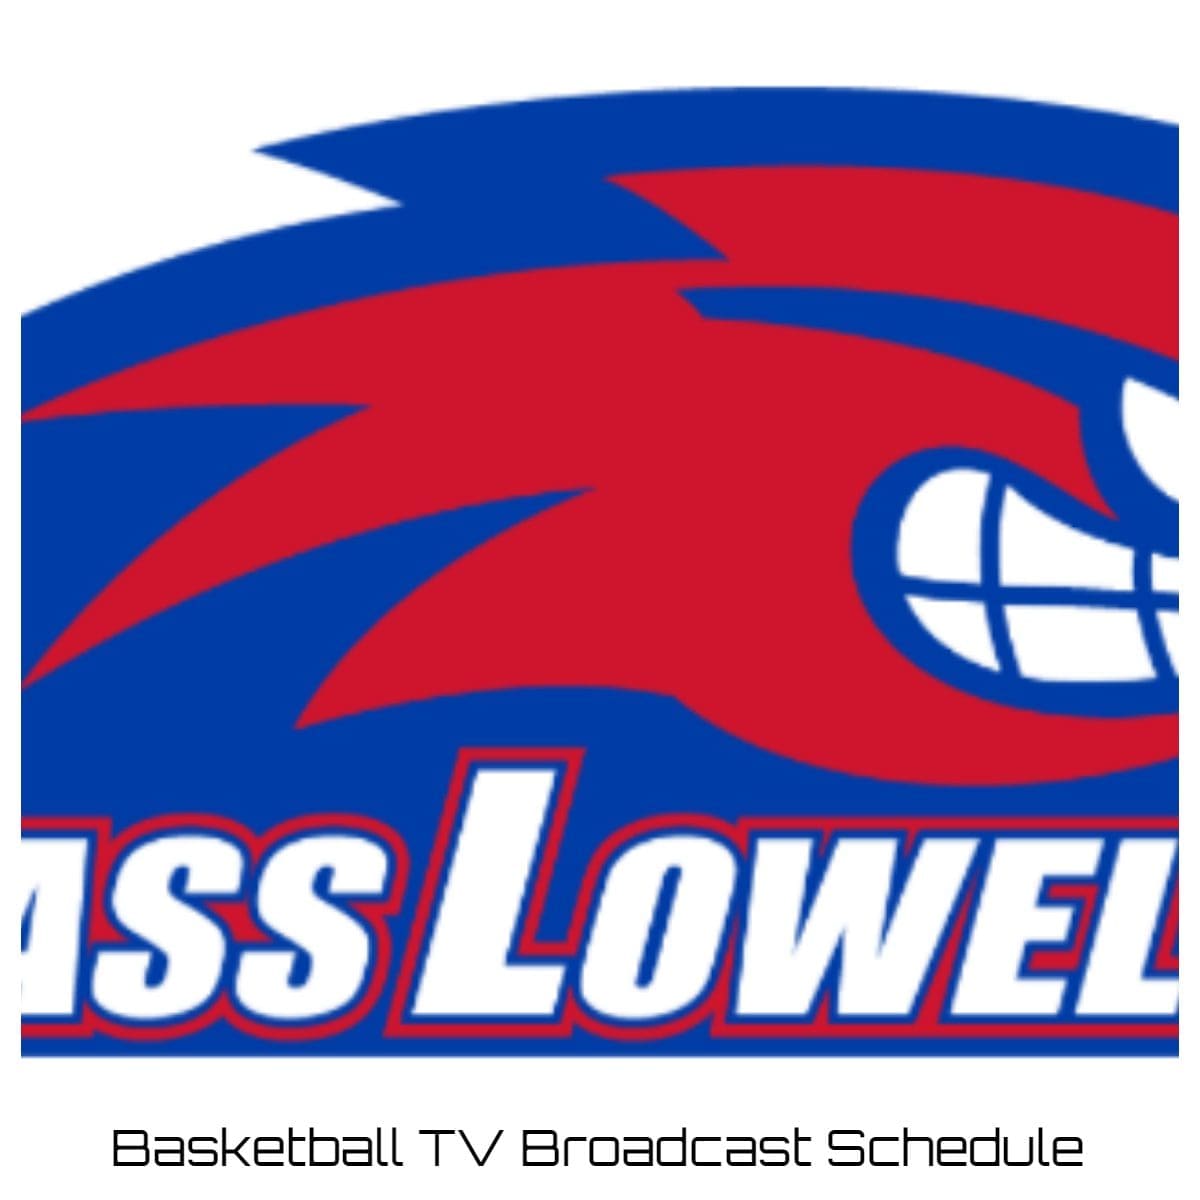 UMass Lowell River Hawks Basketball TV Broadcast Schedule